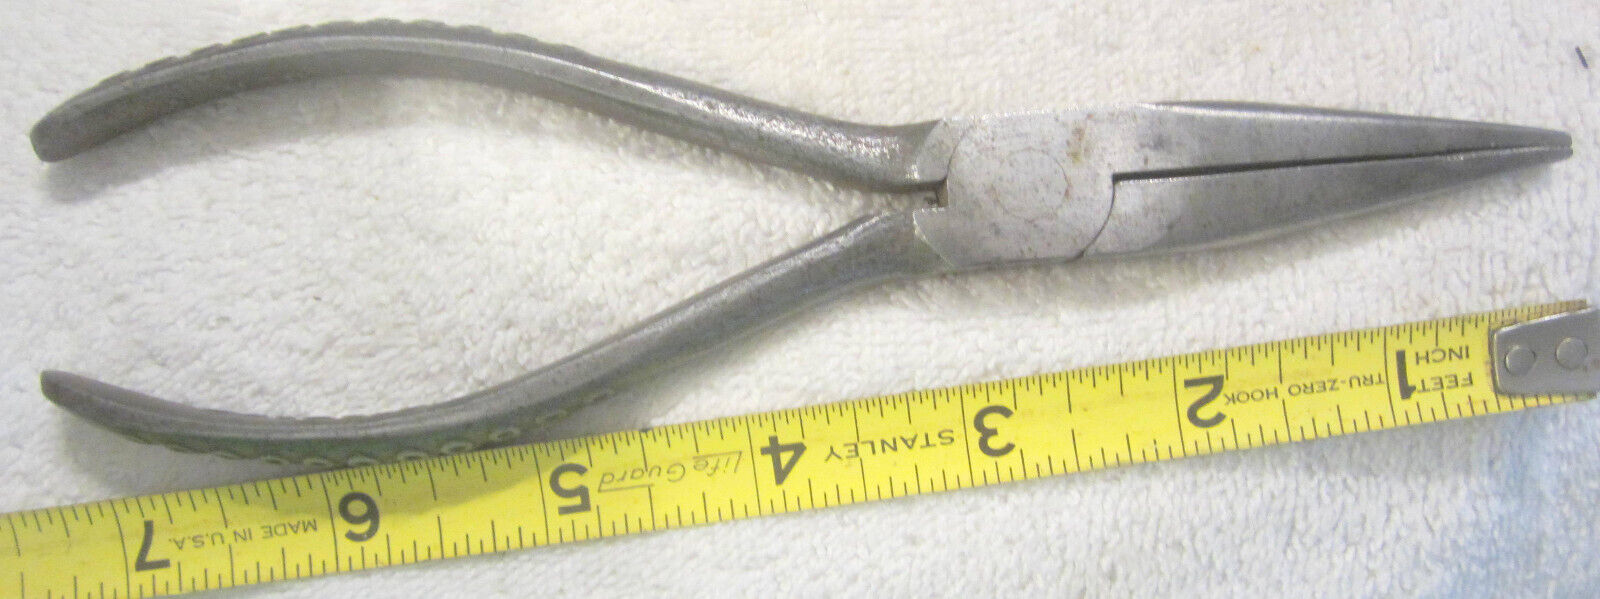 96  Snap-On No. 96 Needle Nose Pliers tool,USA VTG rare